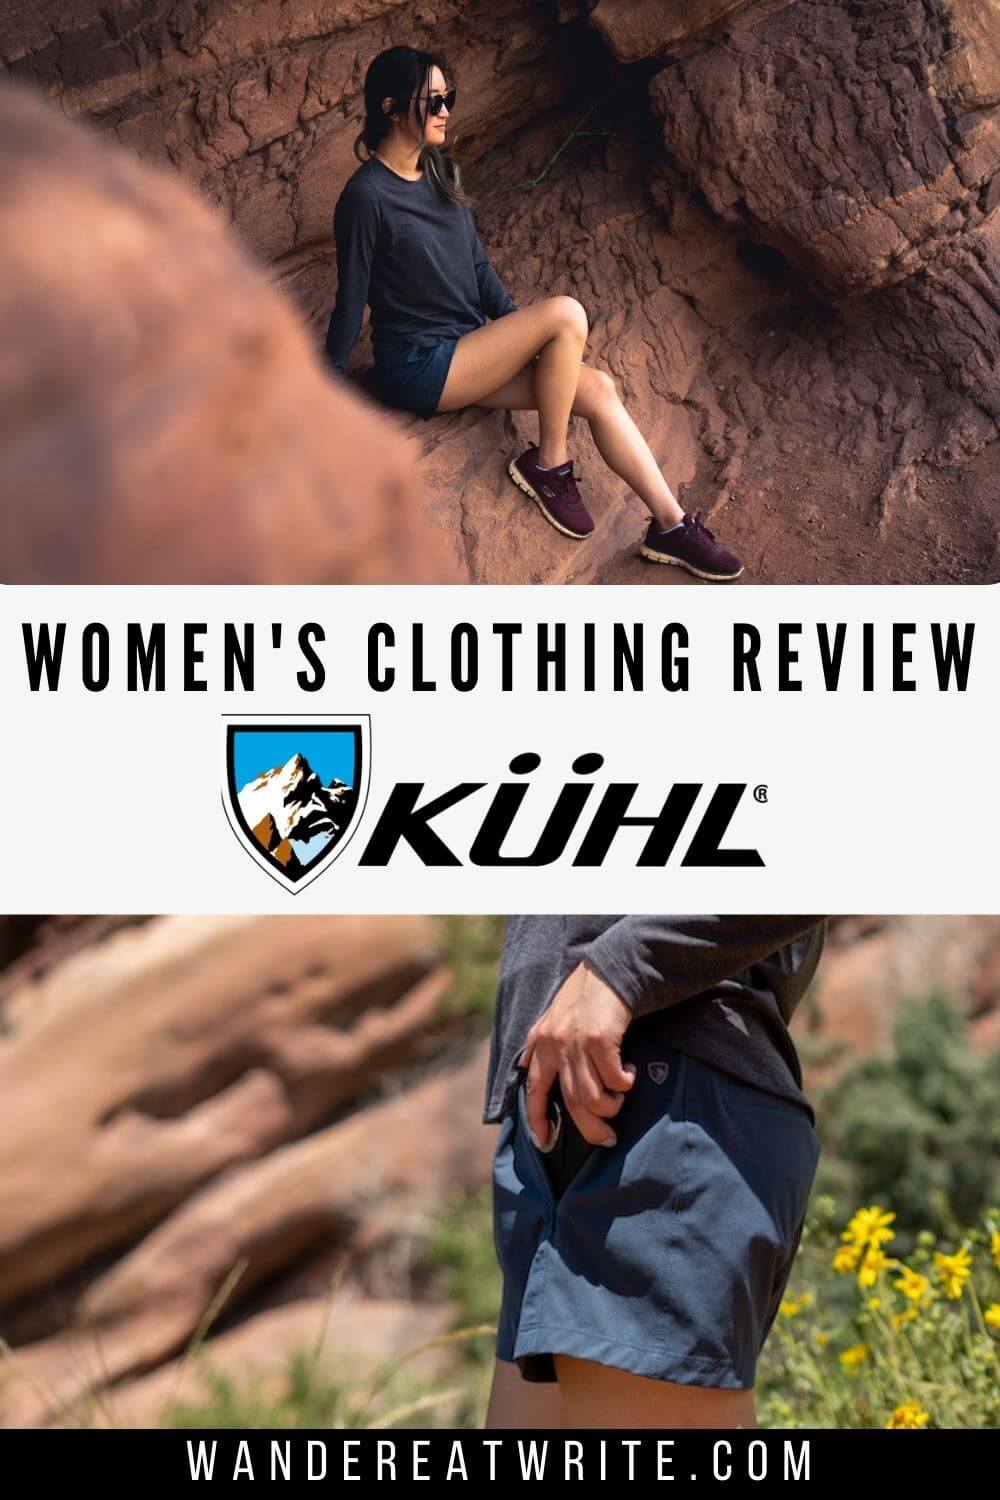 Gear Report: Kühl Hiking Clothing